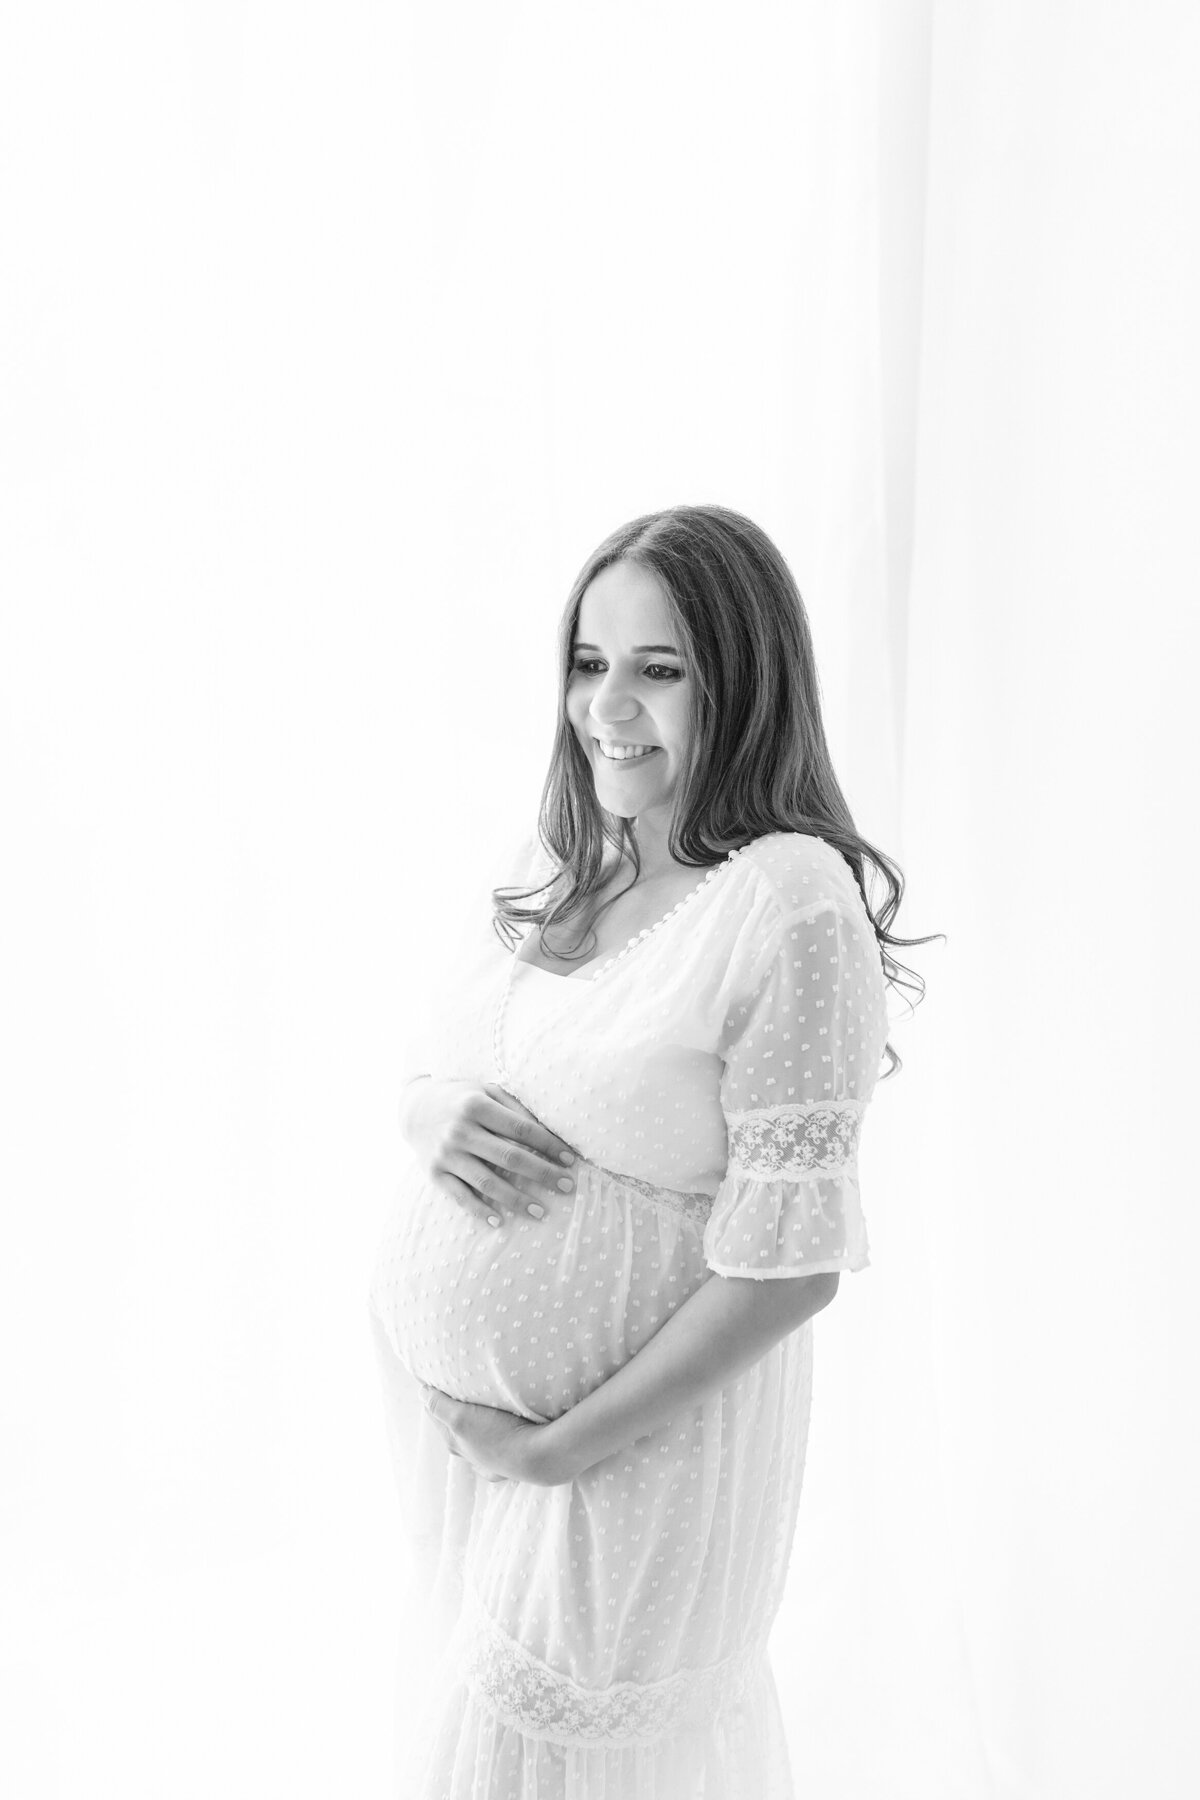 jacksonville-maternity-photographer-17